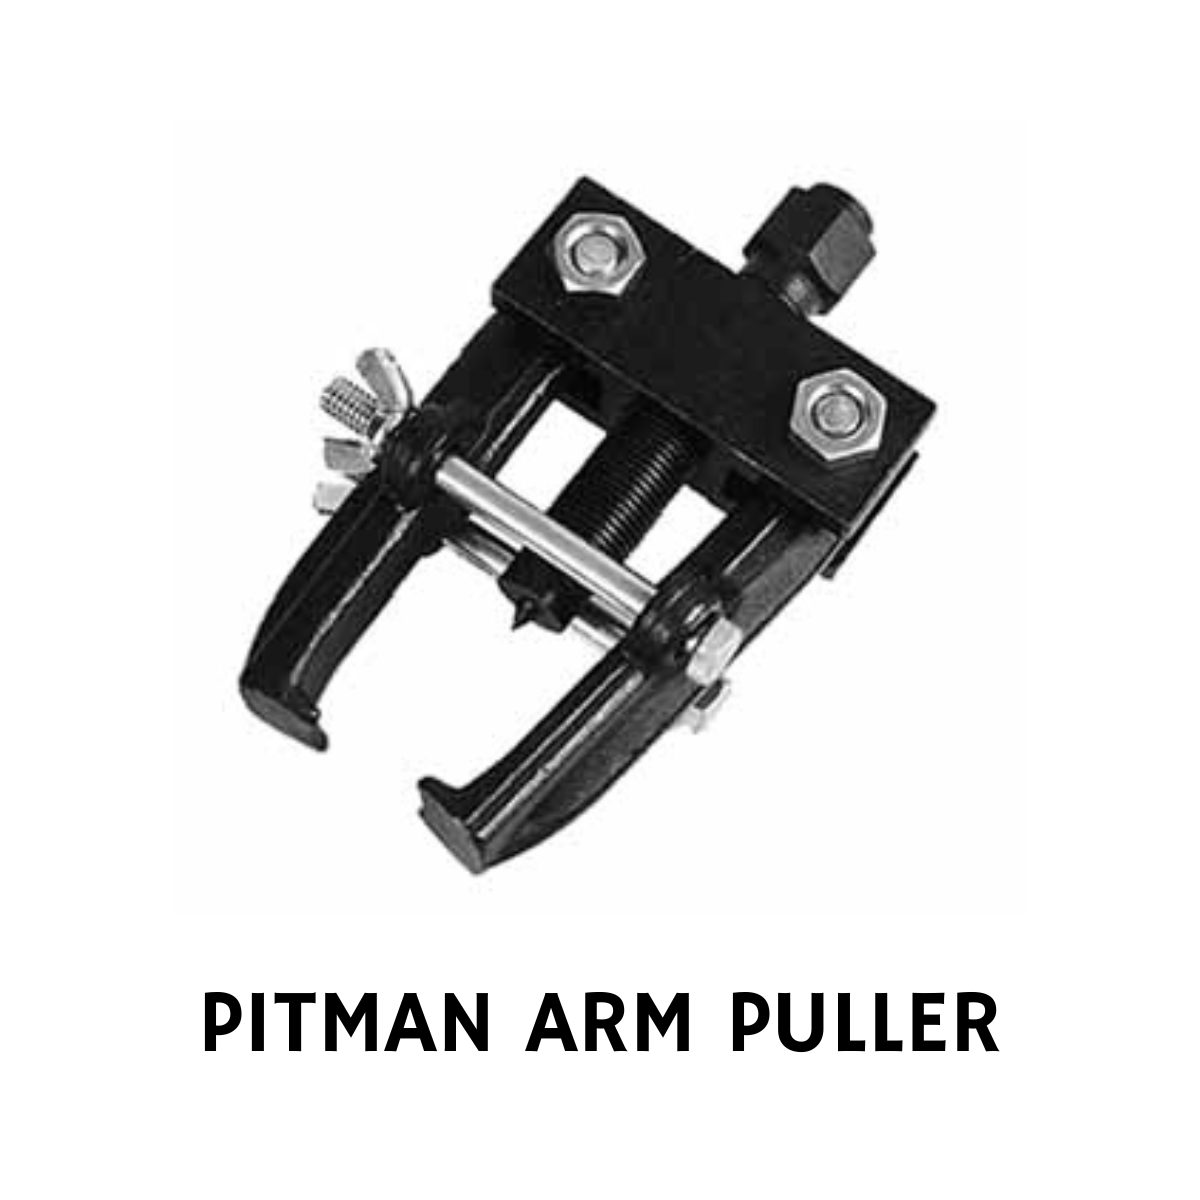 PITMAN ARM PULLER